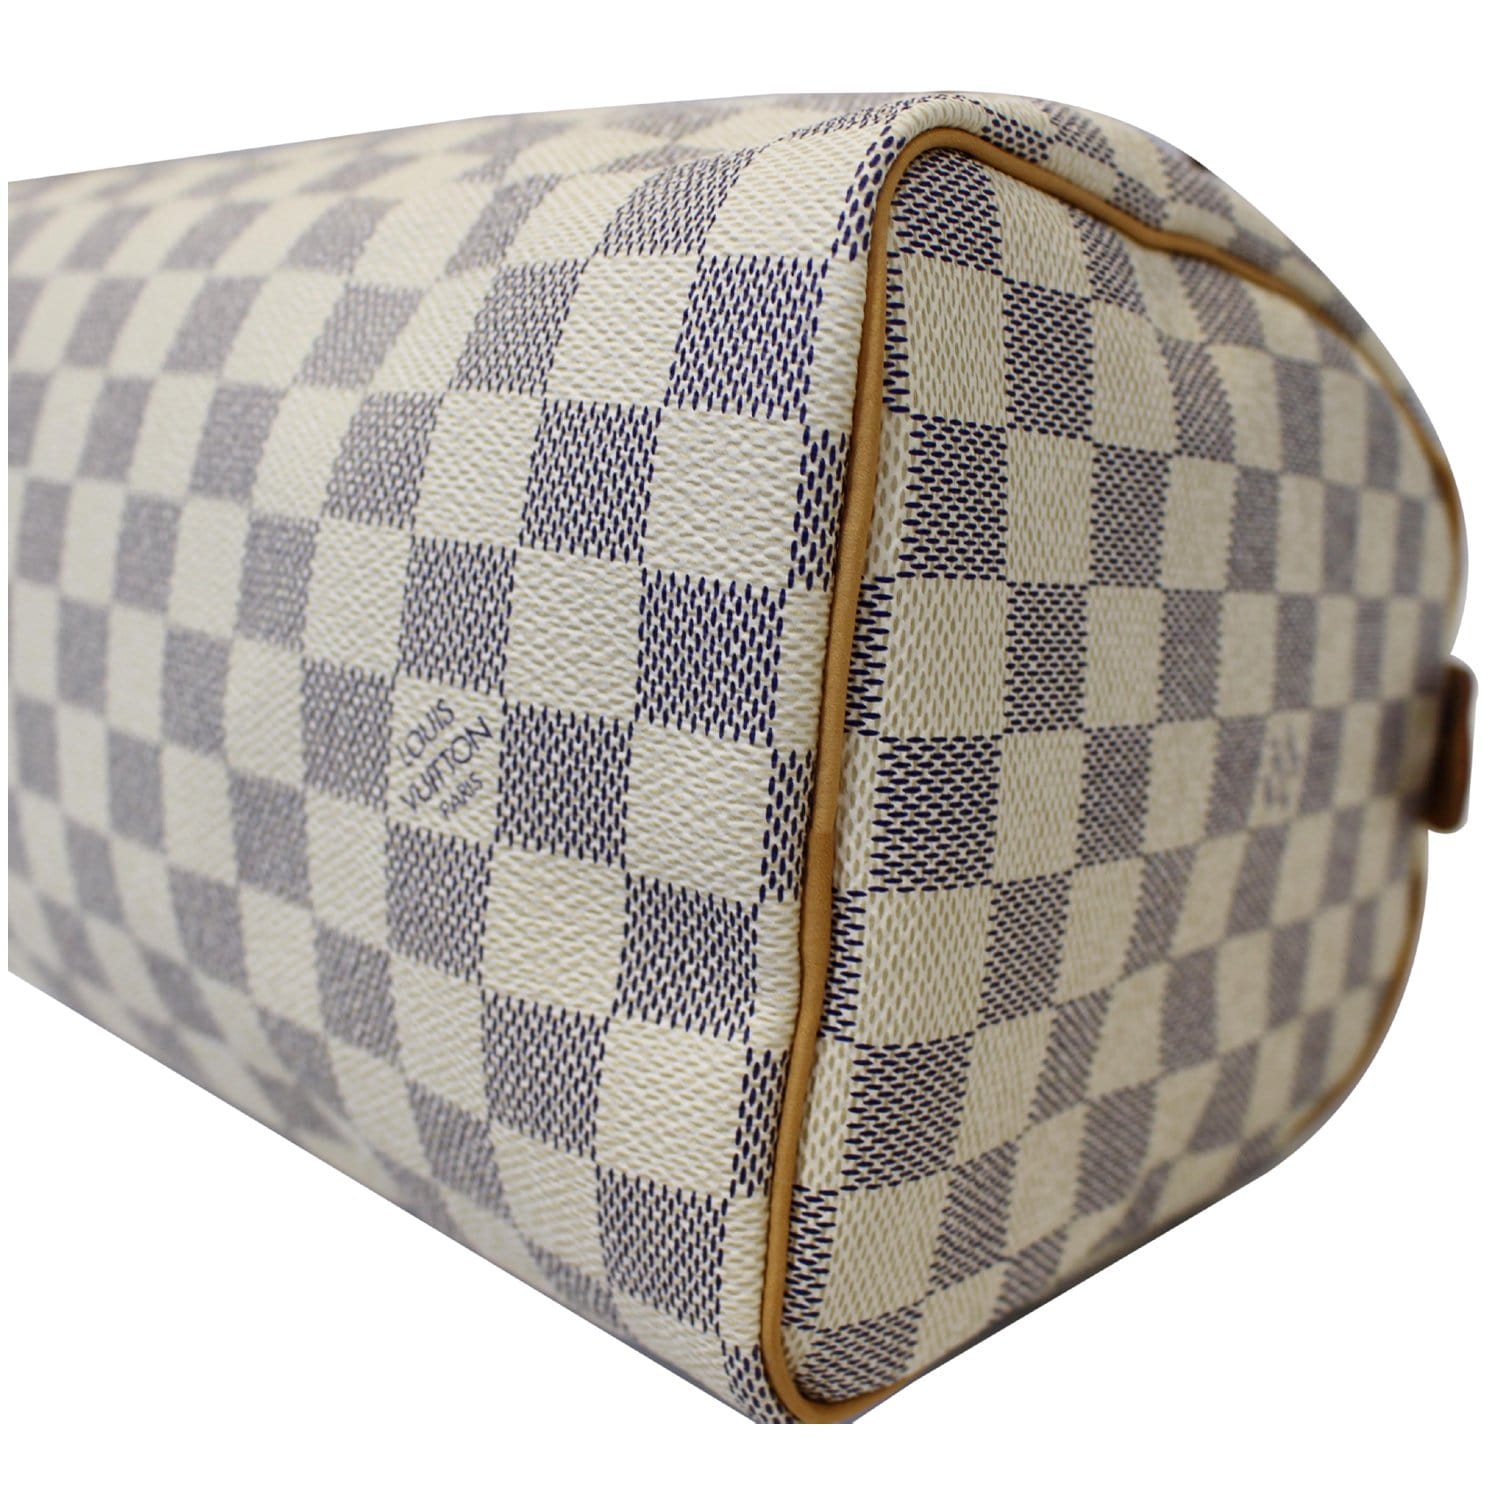 Price: $472 Authentic Louis Vuitton Monogram Speedy 35 Bag Made in